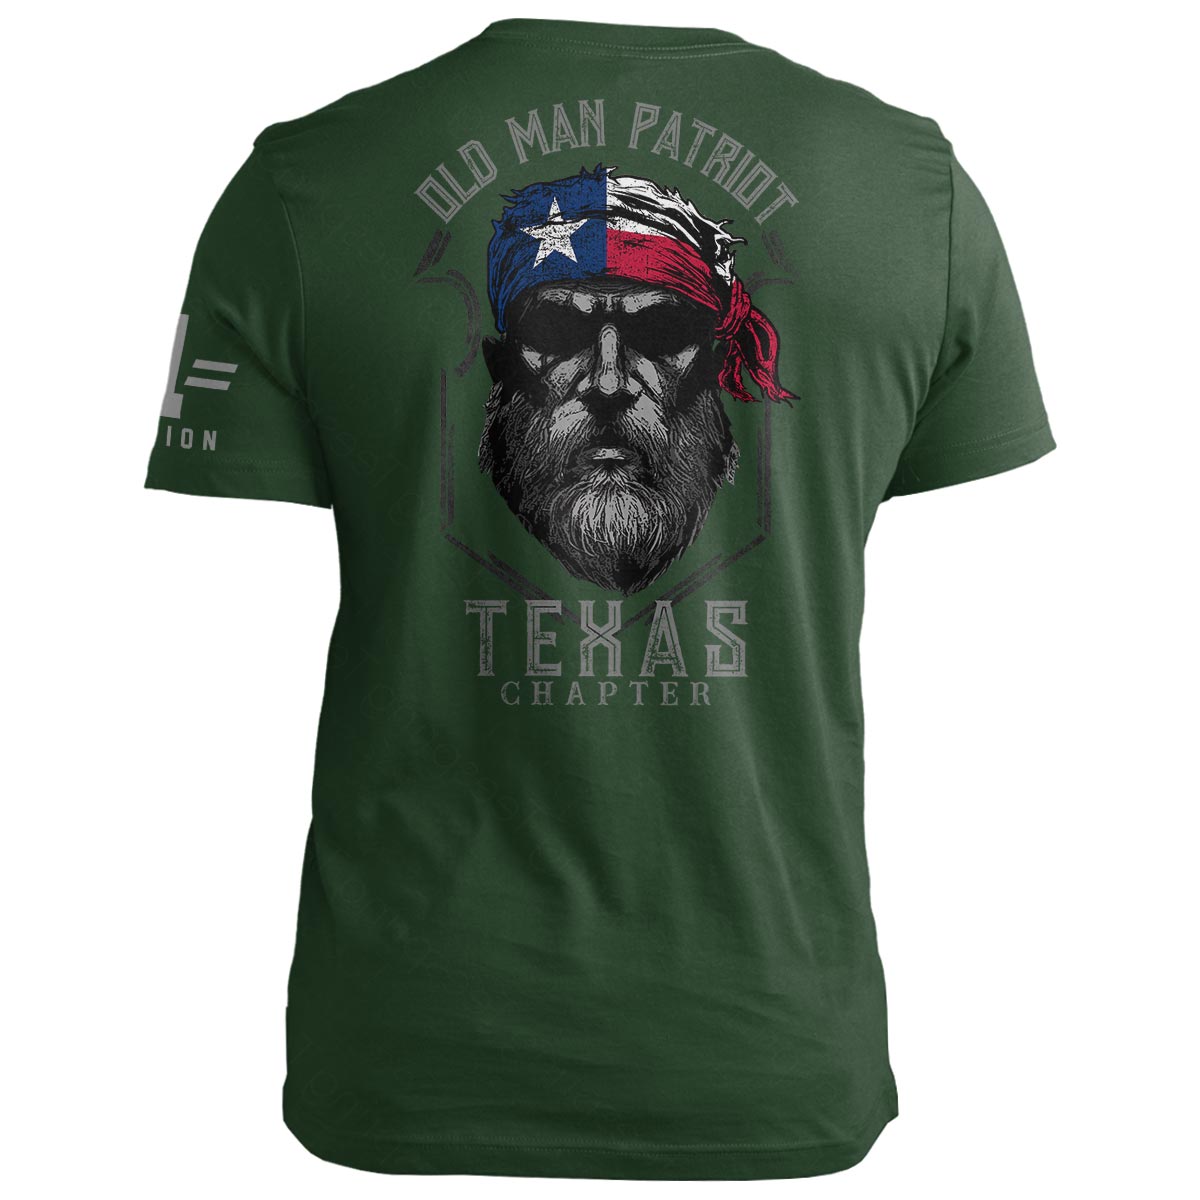 Texas Old Man Patriot